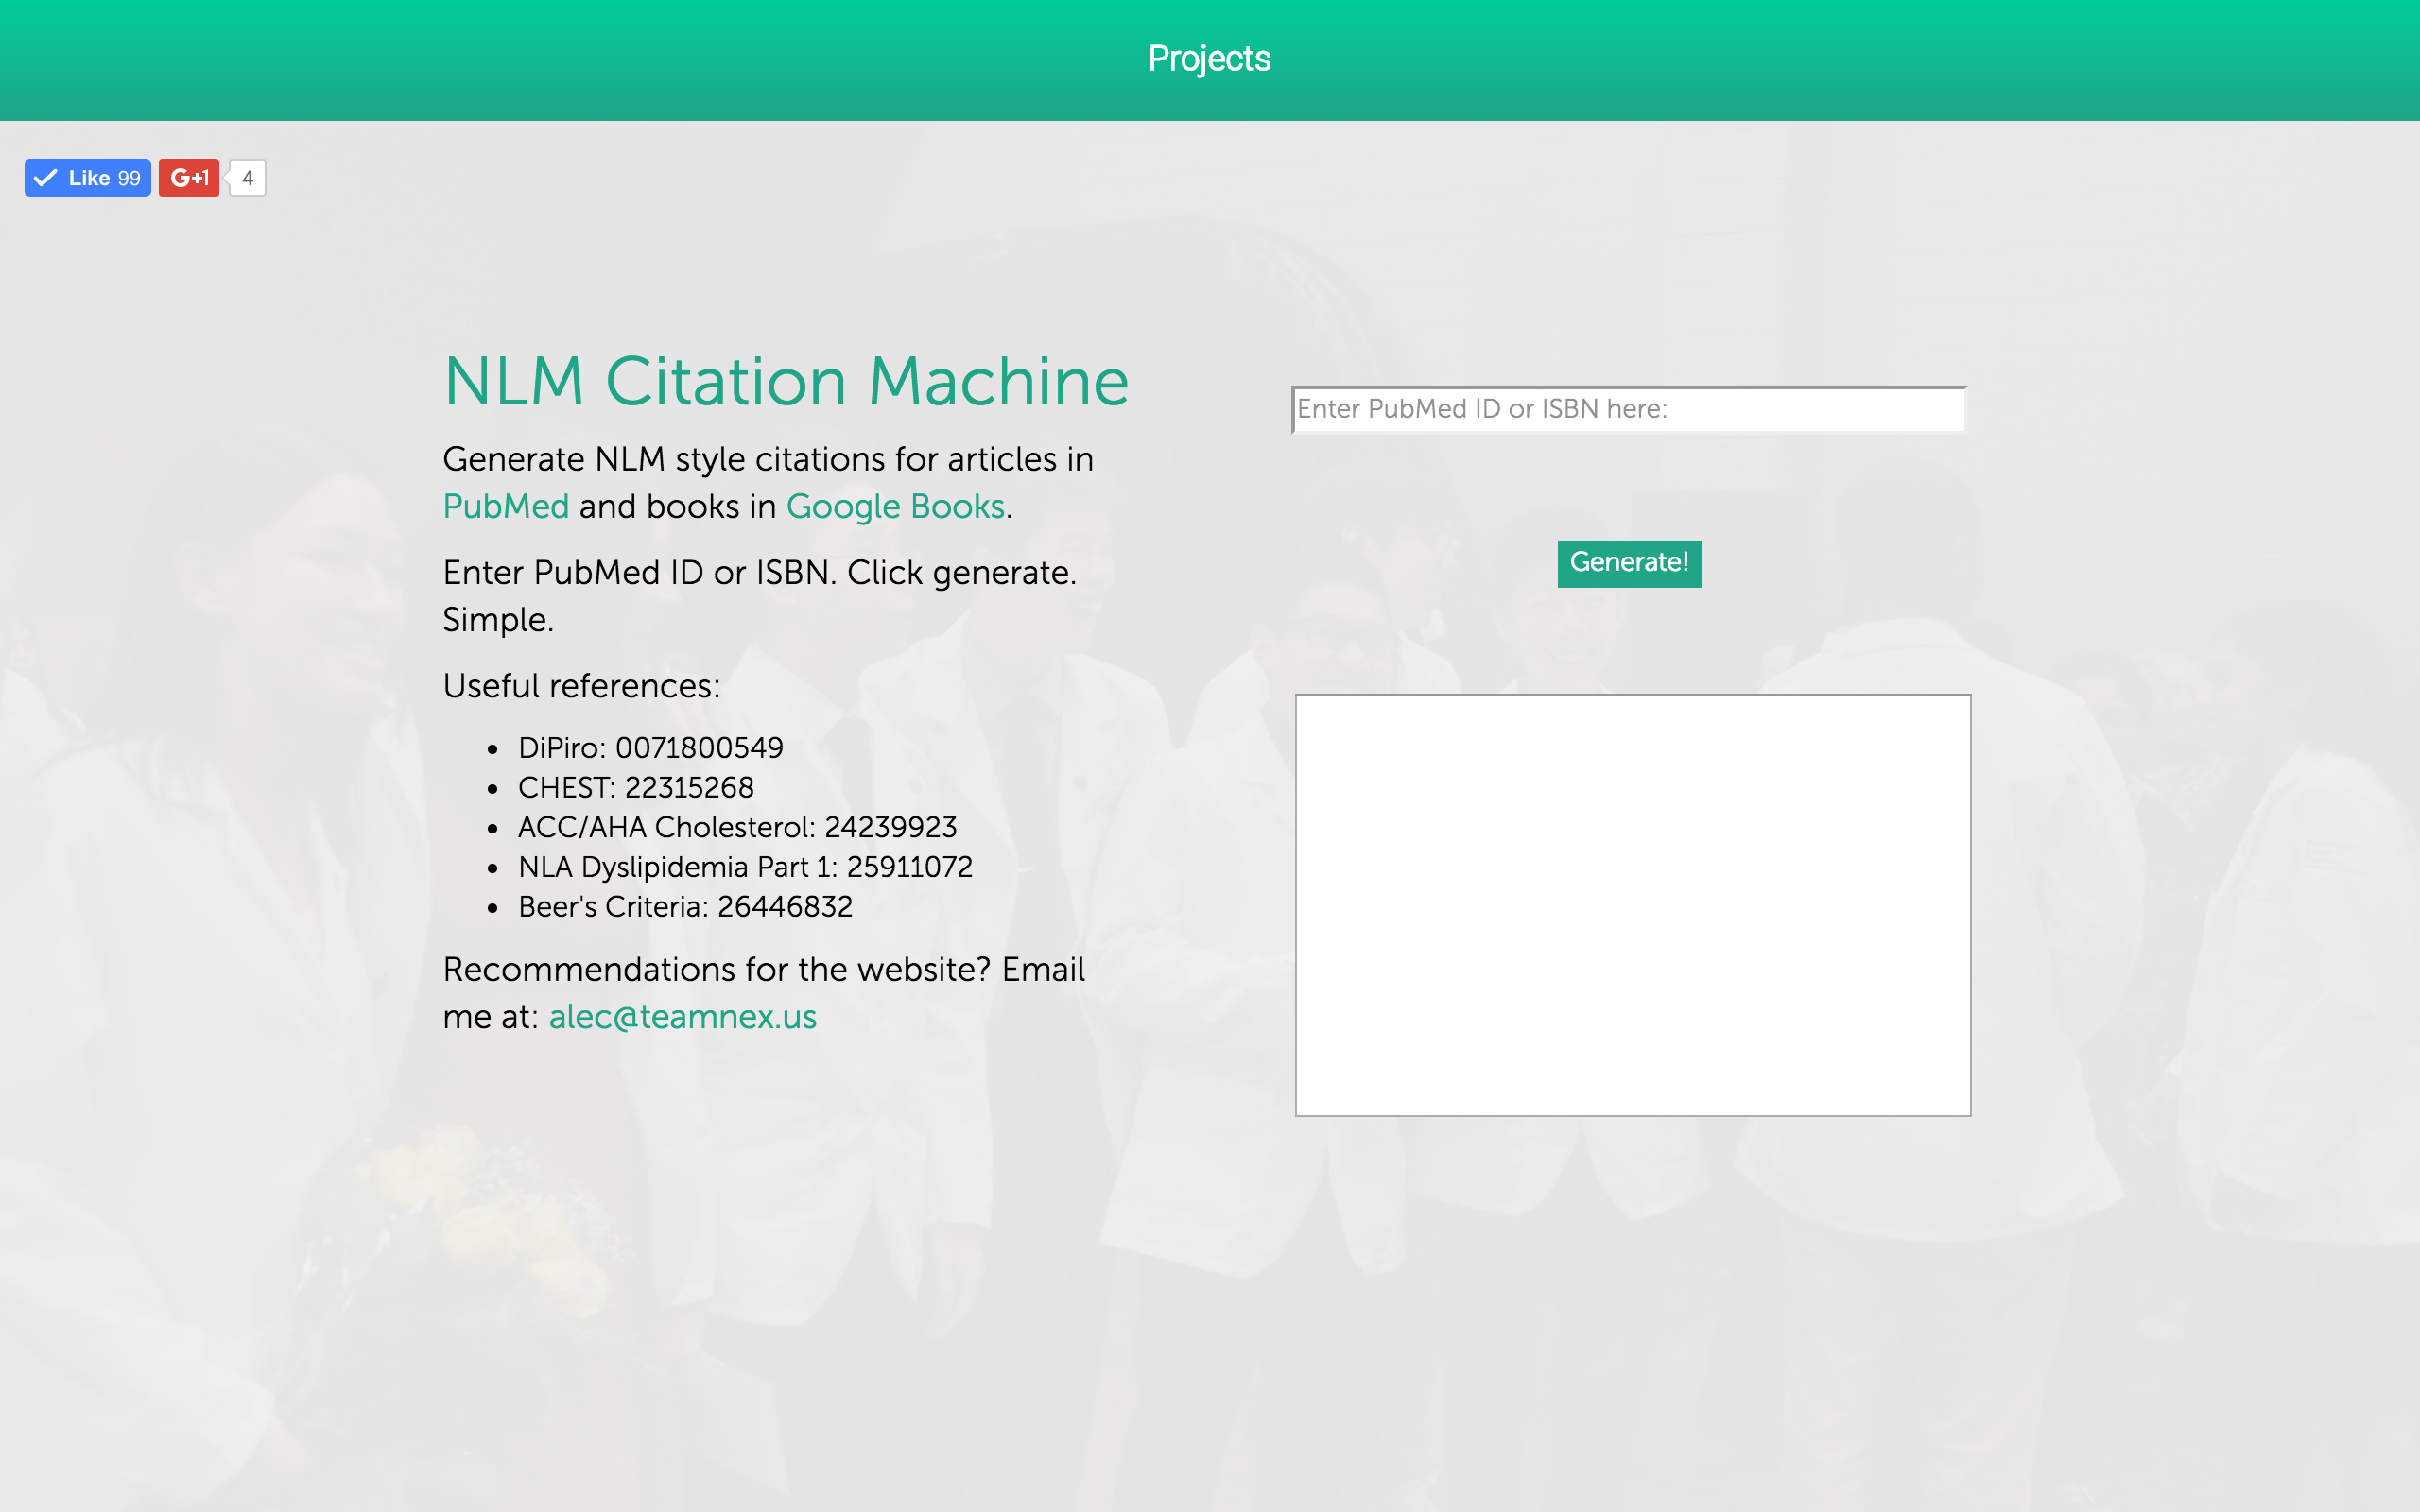 NLM Citation Machine